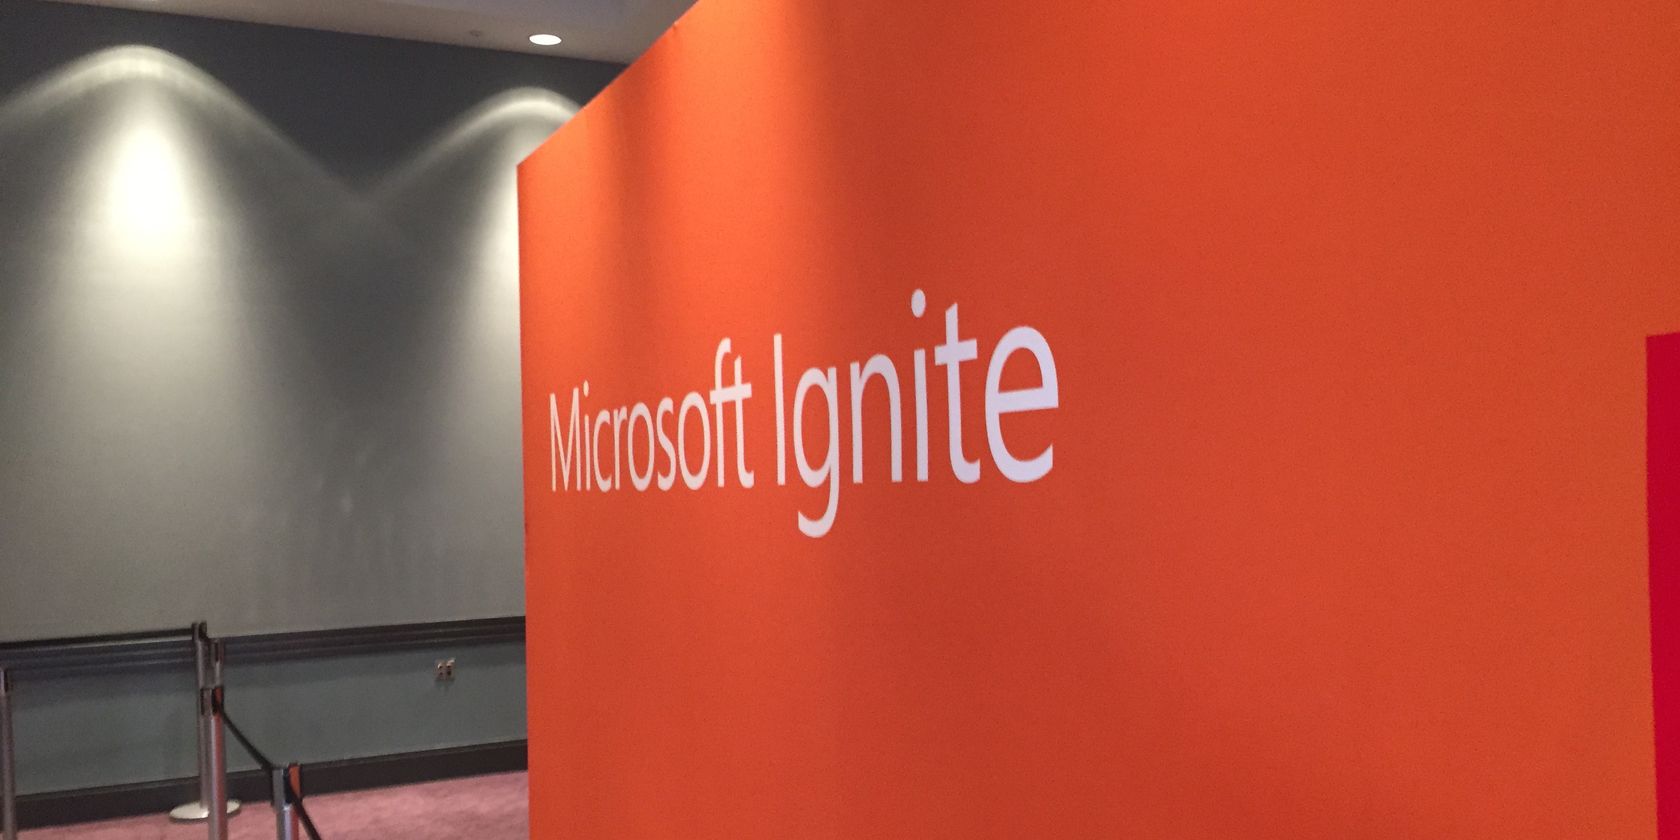 The Microsoft Ignite event logo